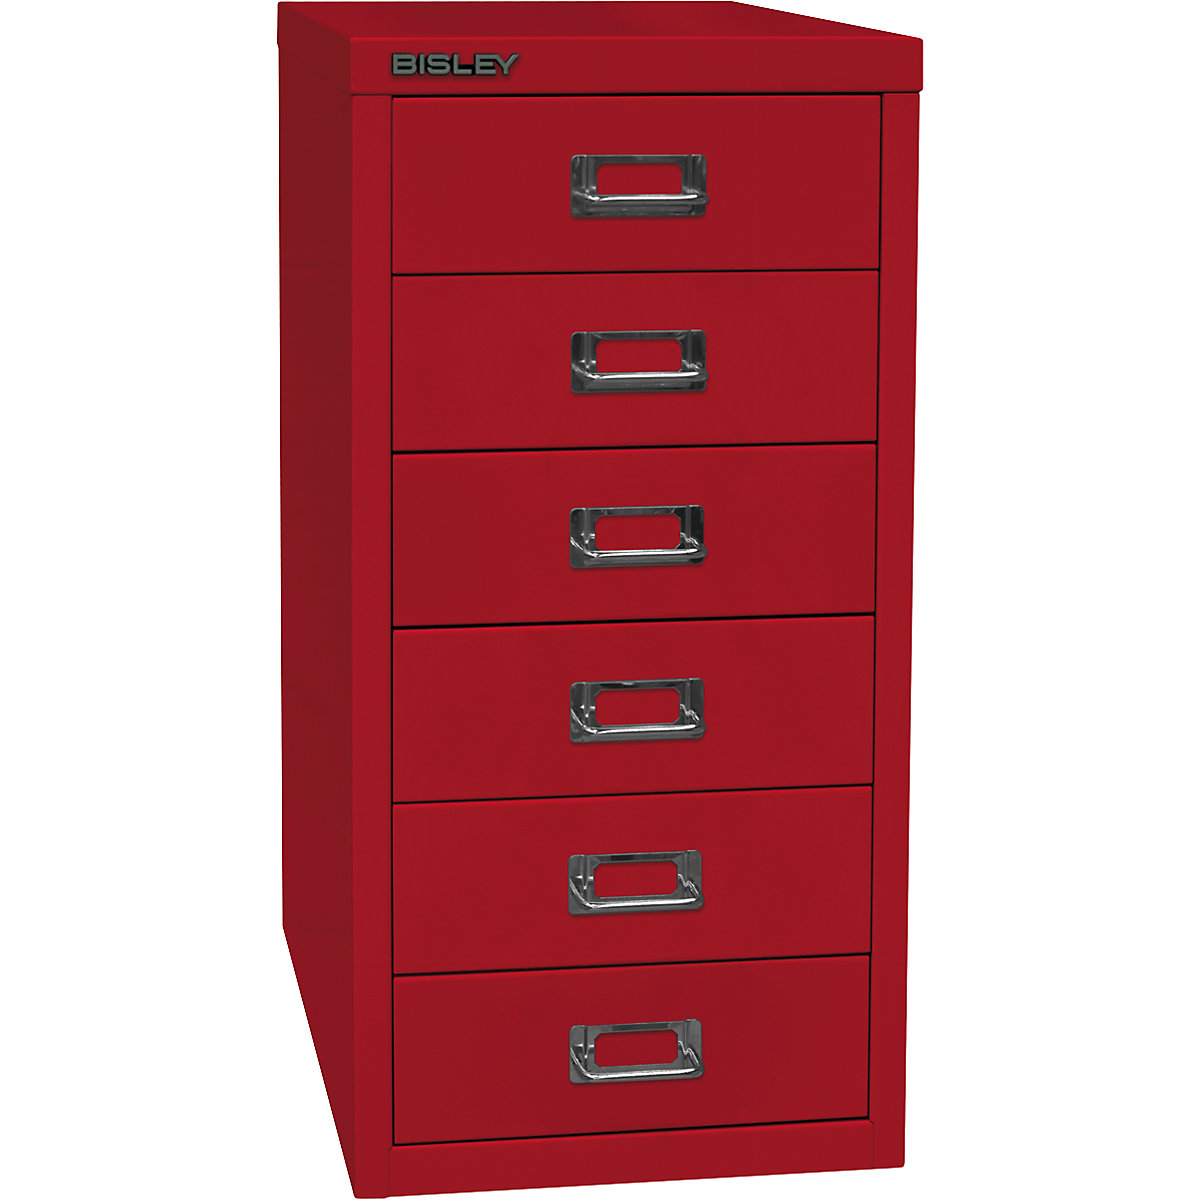 MultiDrawer™ 29 series – BISLEY, A4, 6 drawers, cardinal red-8